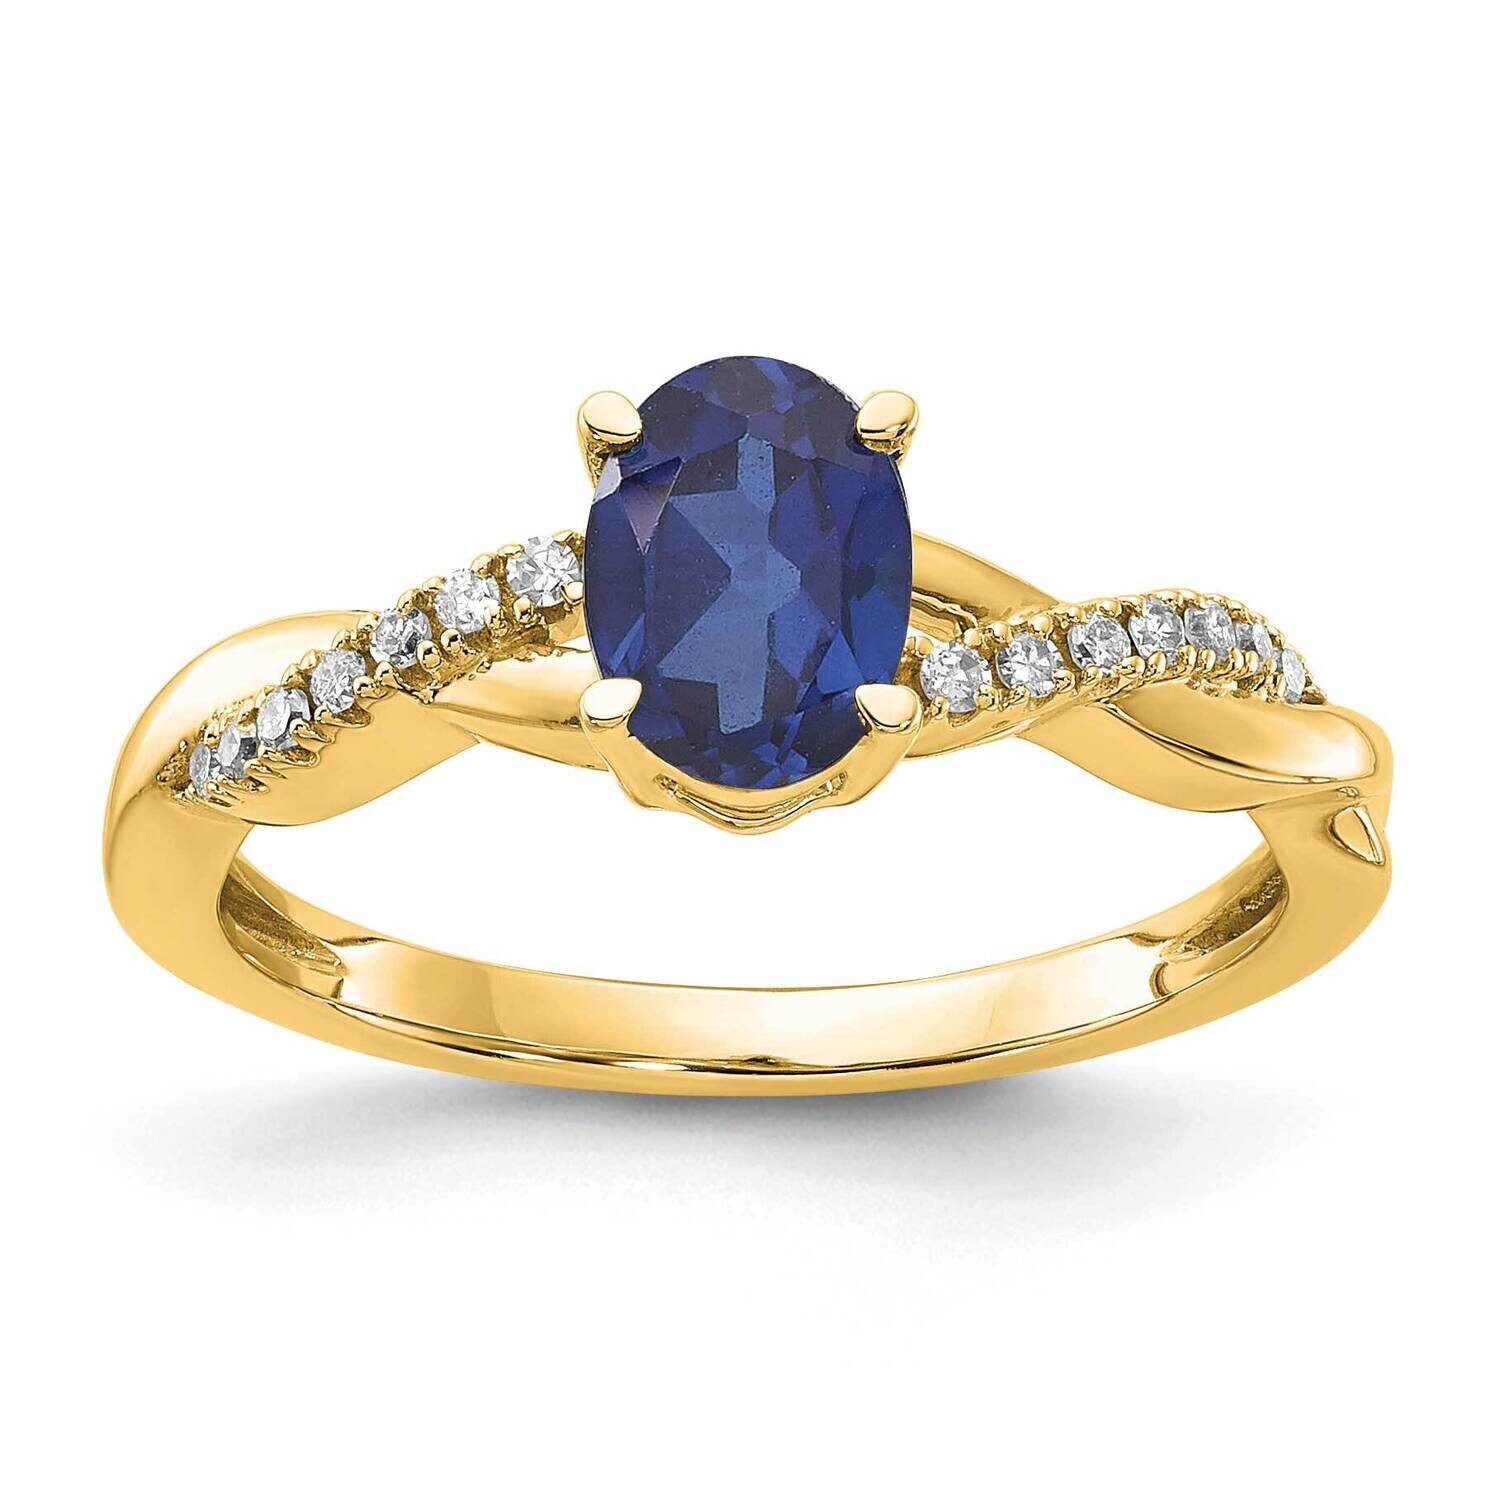 Oval Created Sapphire Diamond Ring 14k Gold RM4235-CSA-008-YA